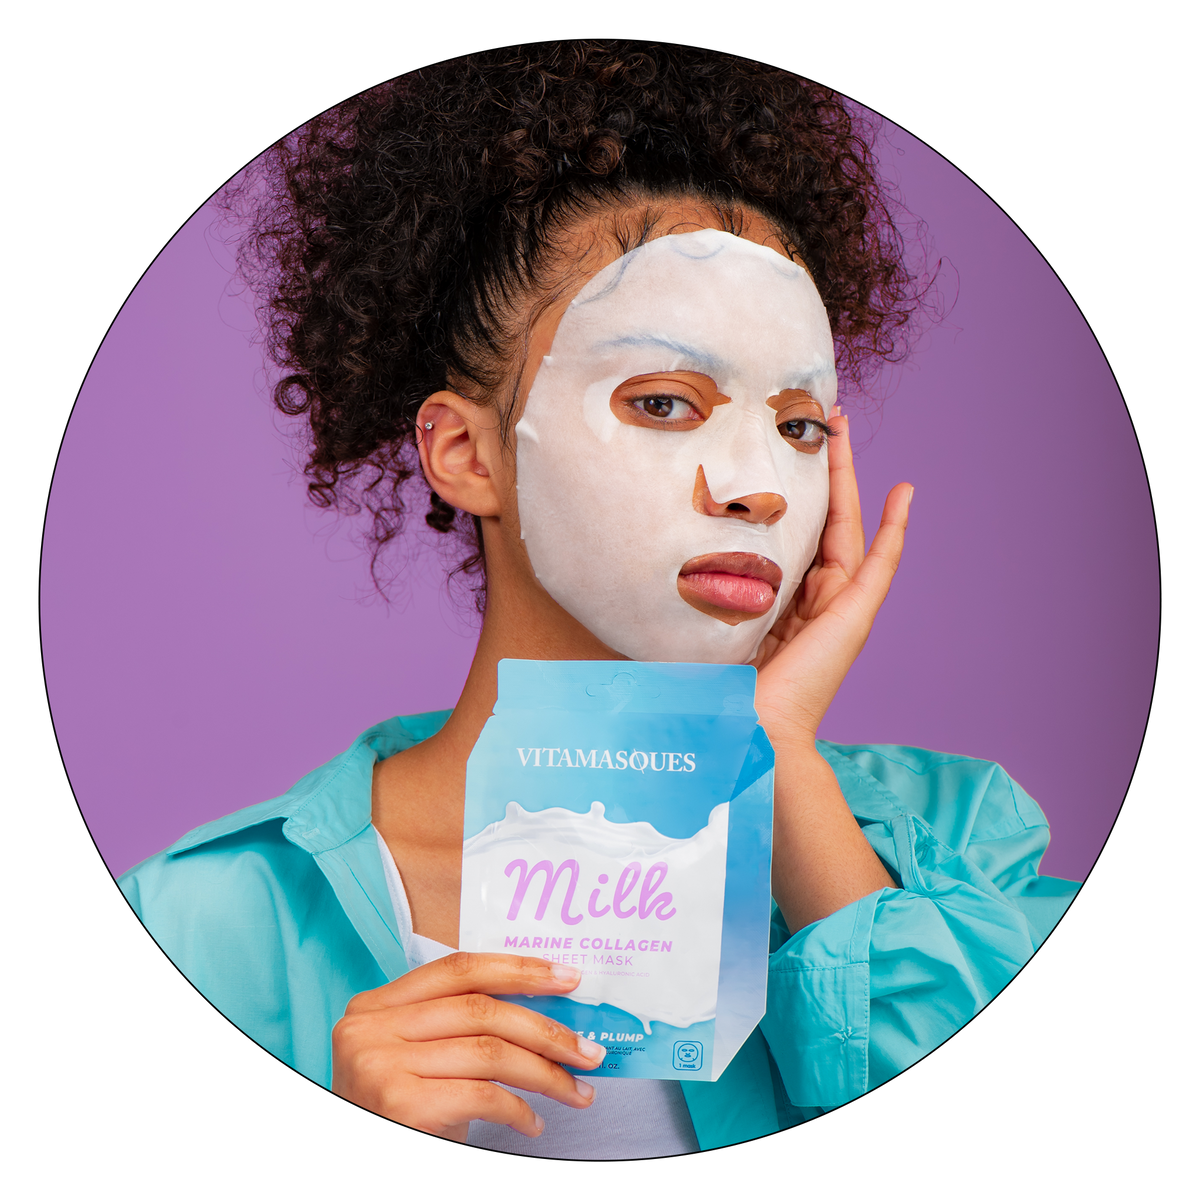 Milk Marine Collagen Face Sheet Mask